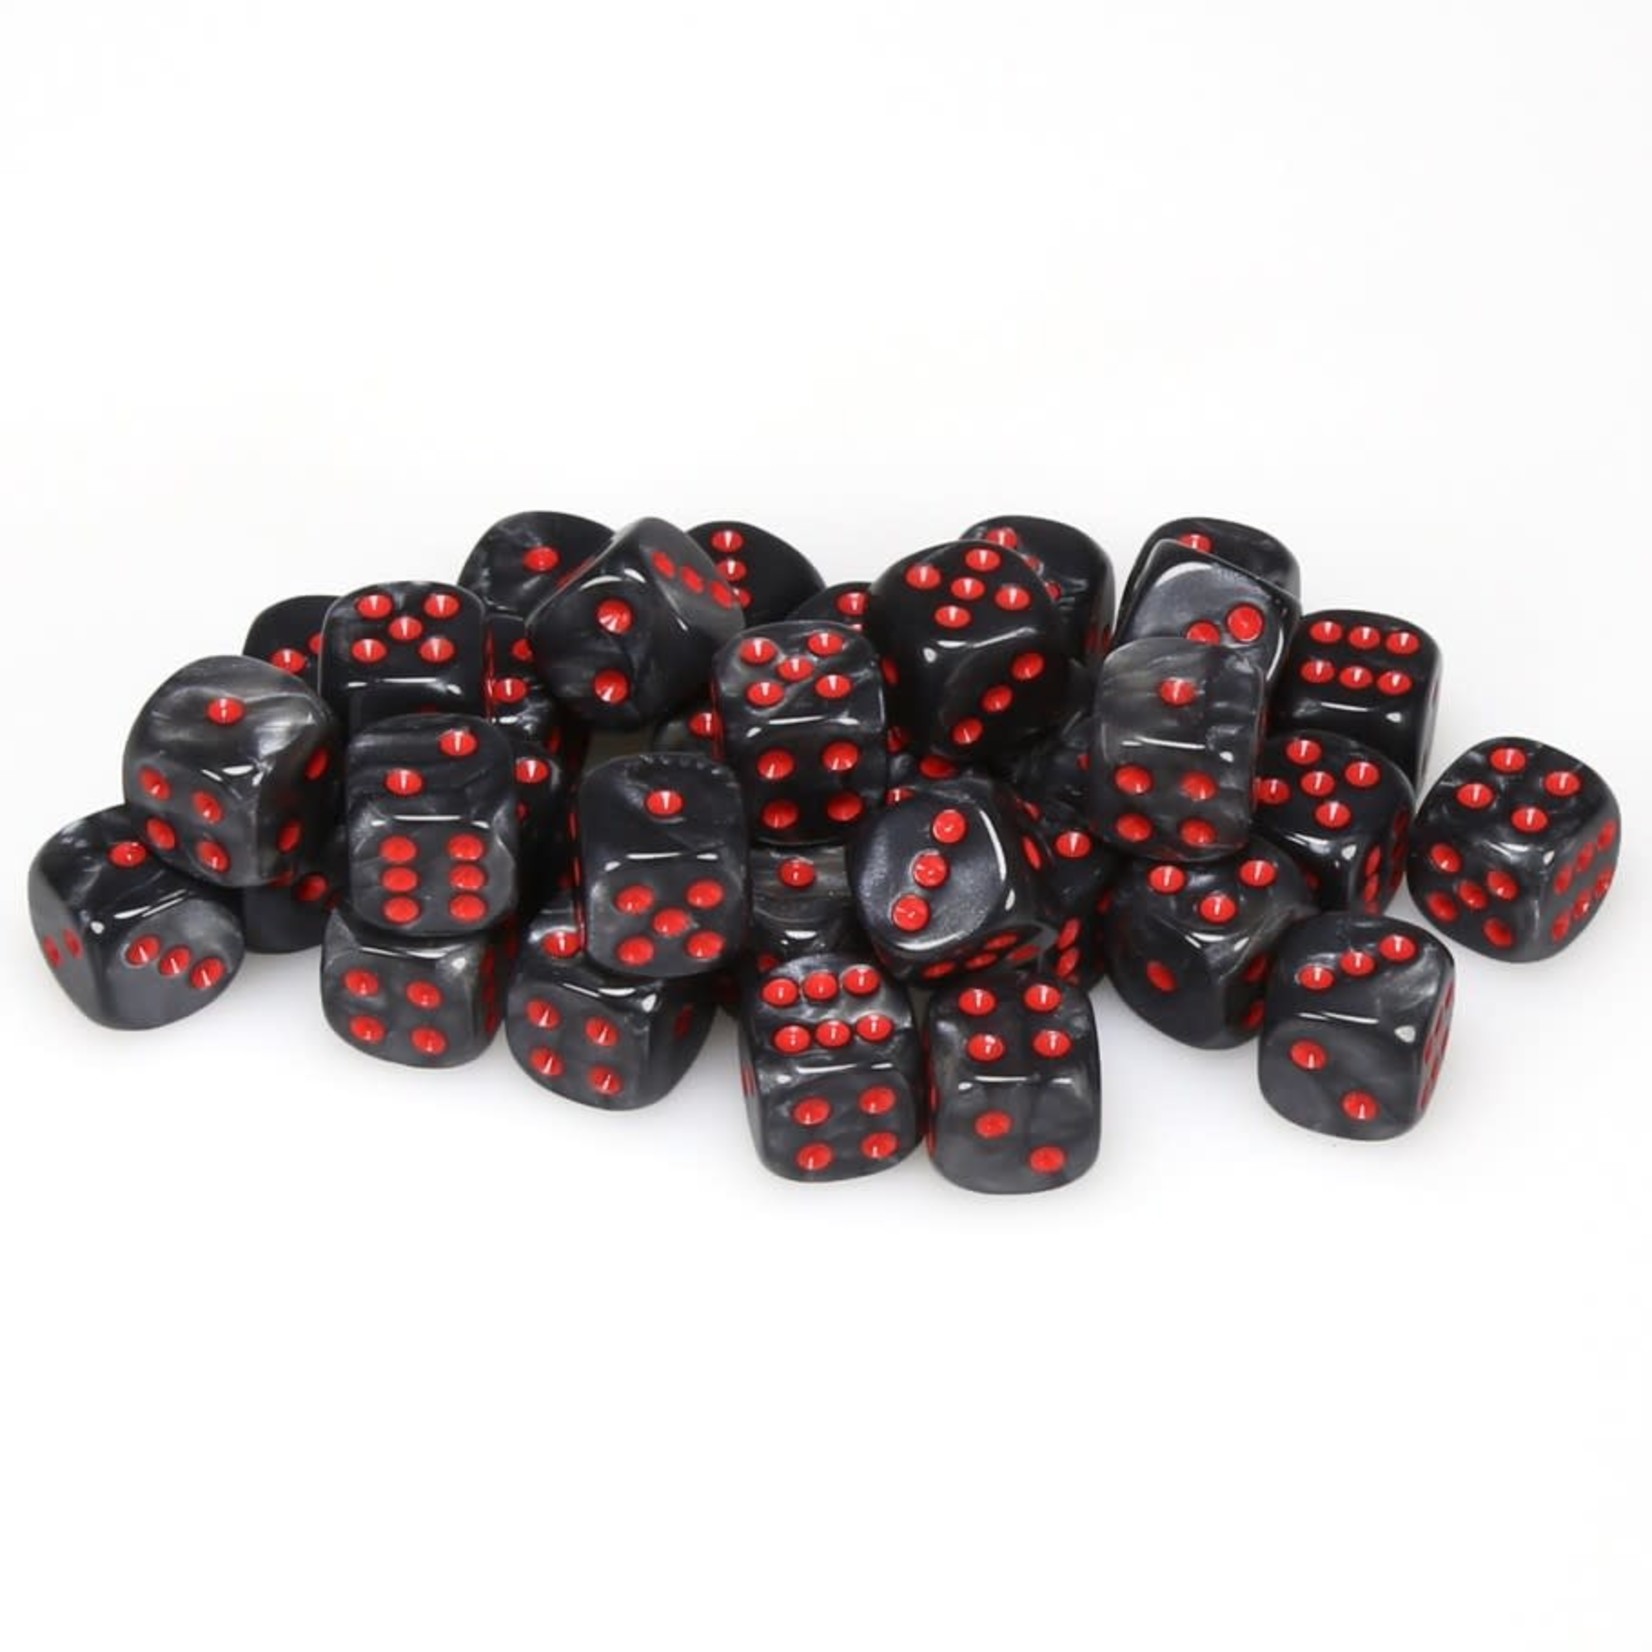 Chessex Chessex Velvet Black with Red 12 mm d6 36 die set